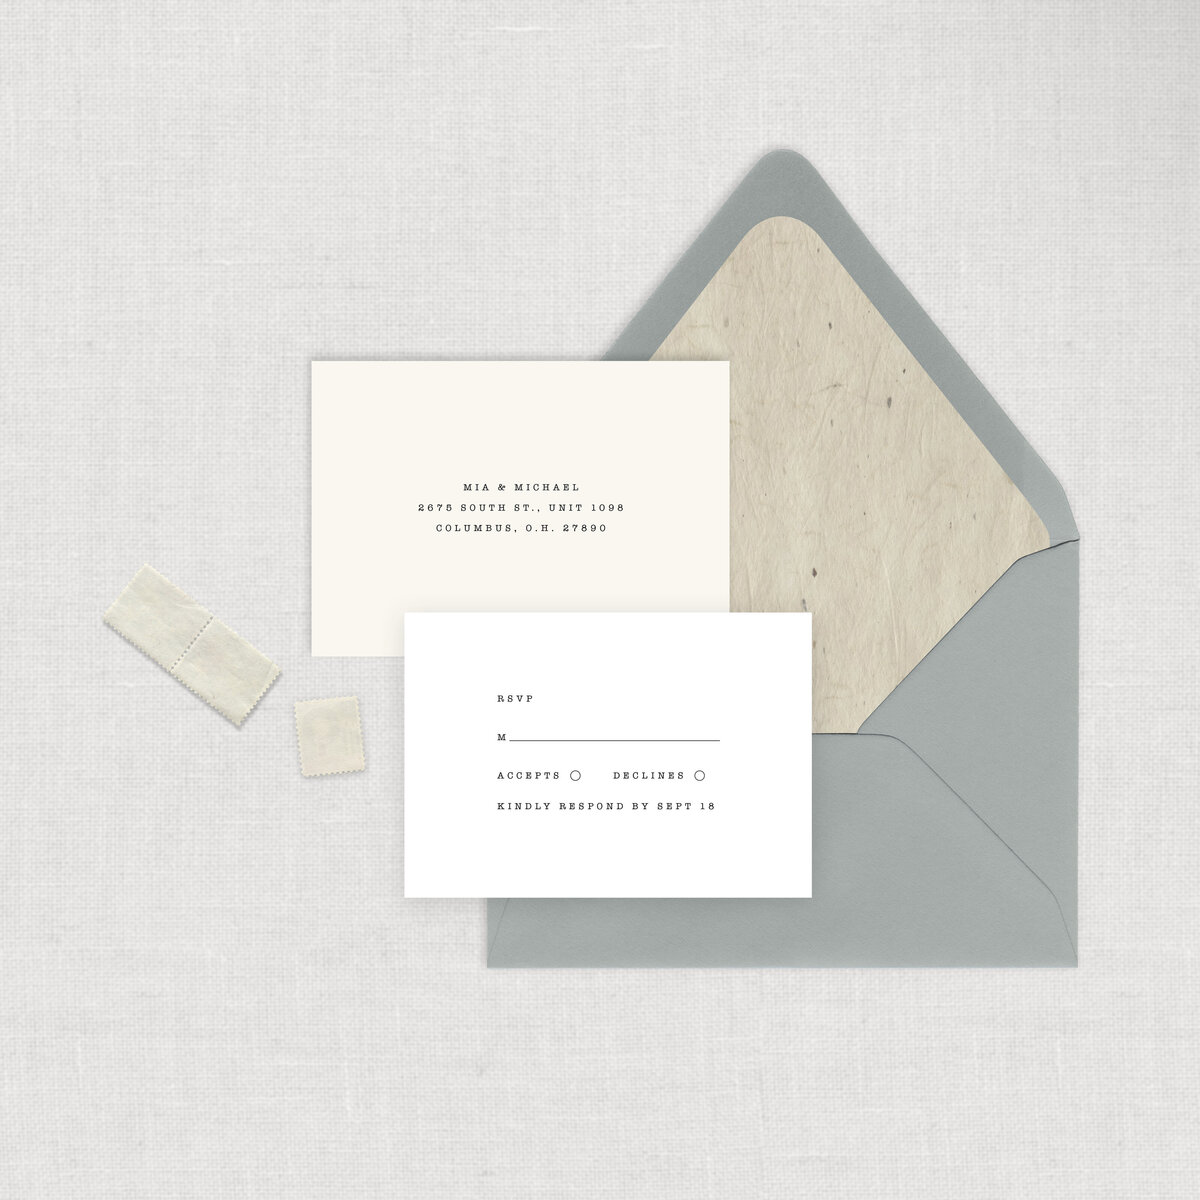 Typewriter wedding invitation suite is a simple wedding invitation with simple clean rsvp card and printed address rsvp envelope.